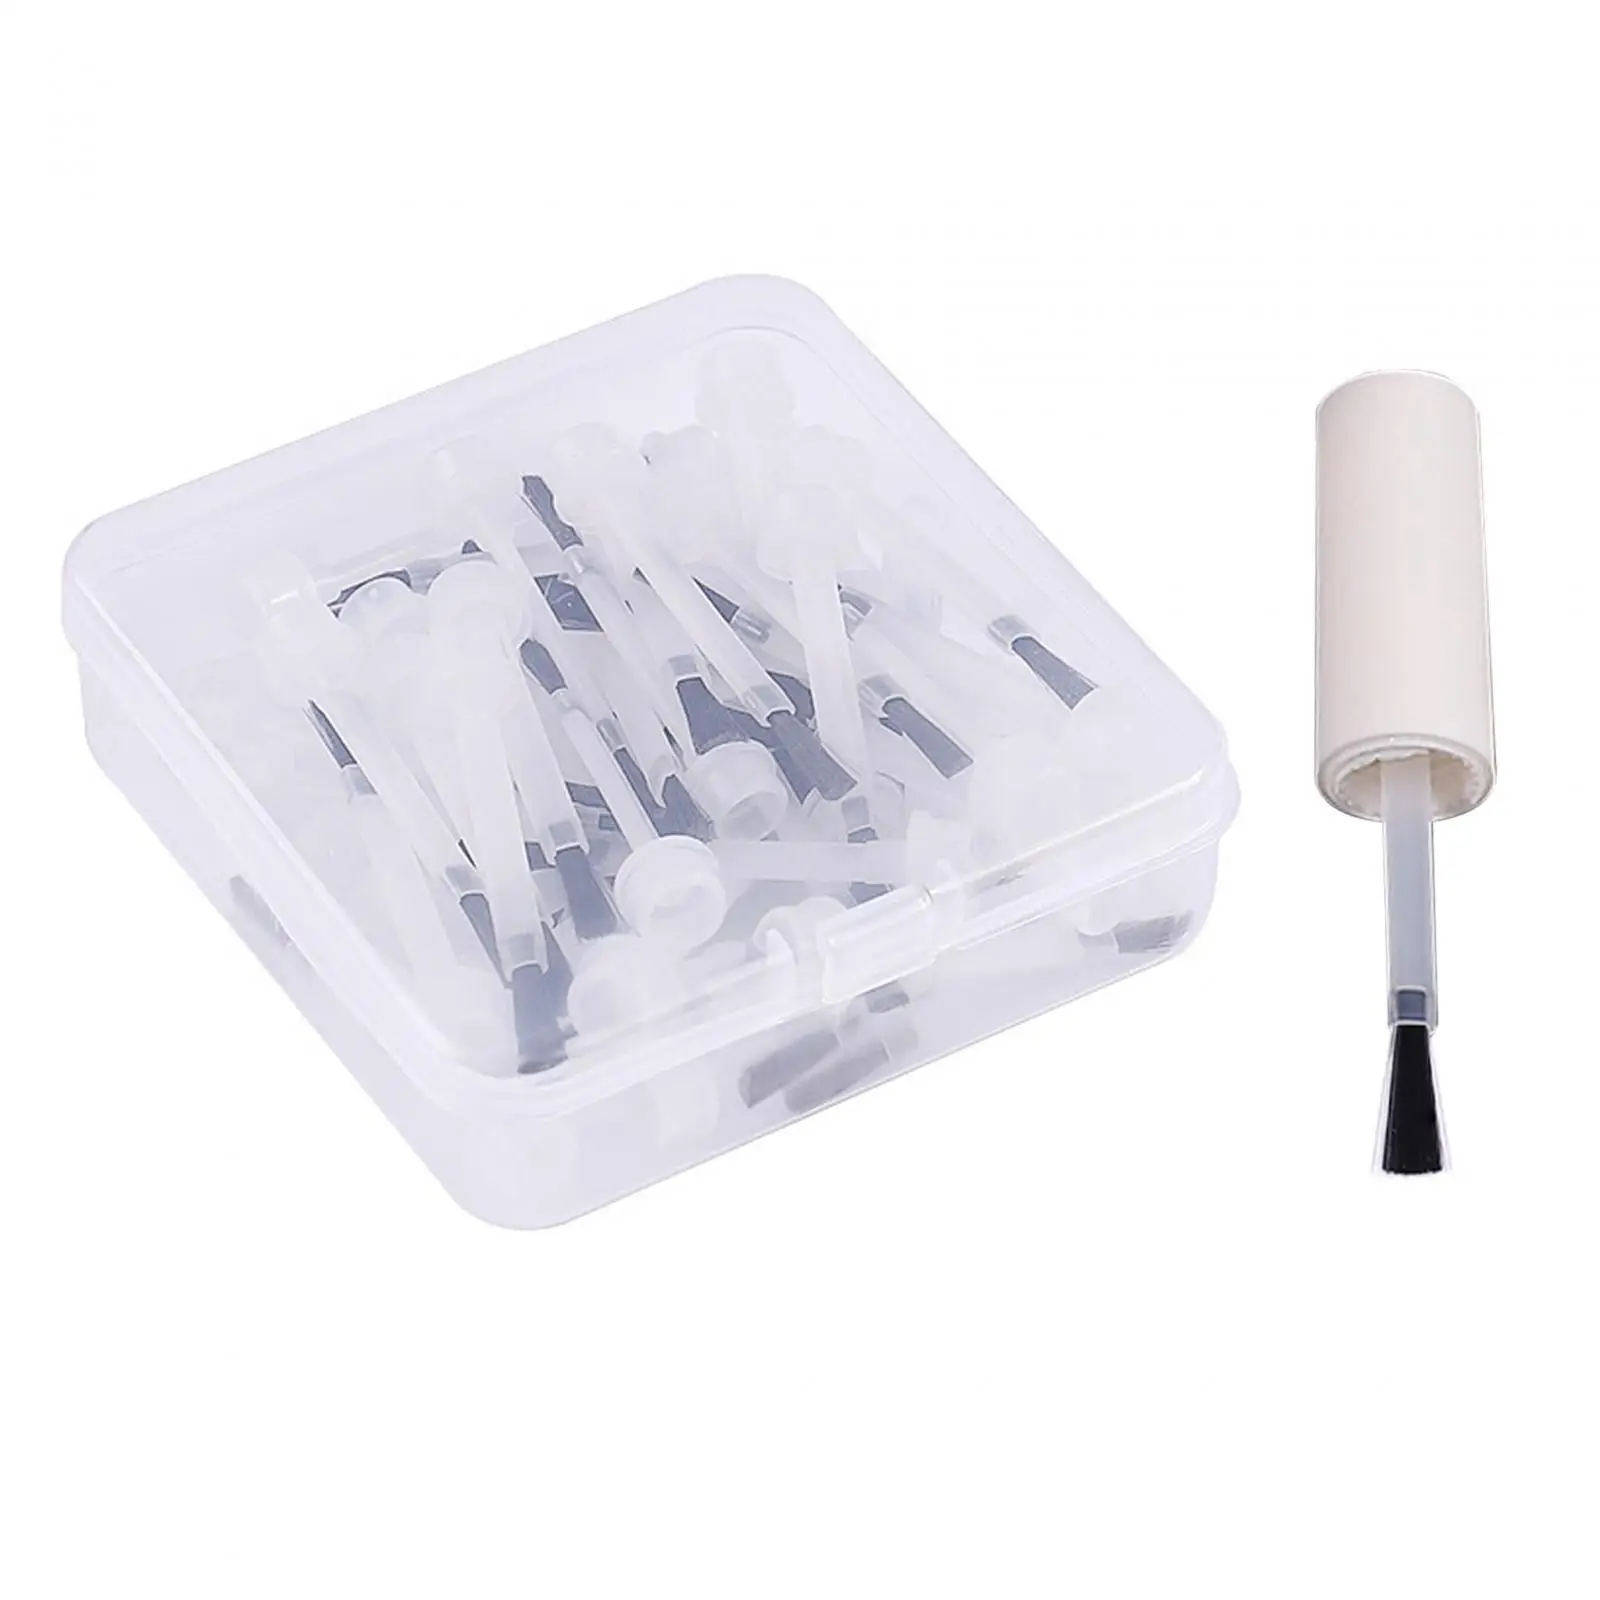 50x Nail Polish Brush Liquid Applicators Brush 5.5x1.2cm Manicure Tools for Salon Home Easily to Use Universal Nail Gel Brush